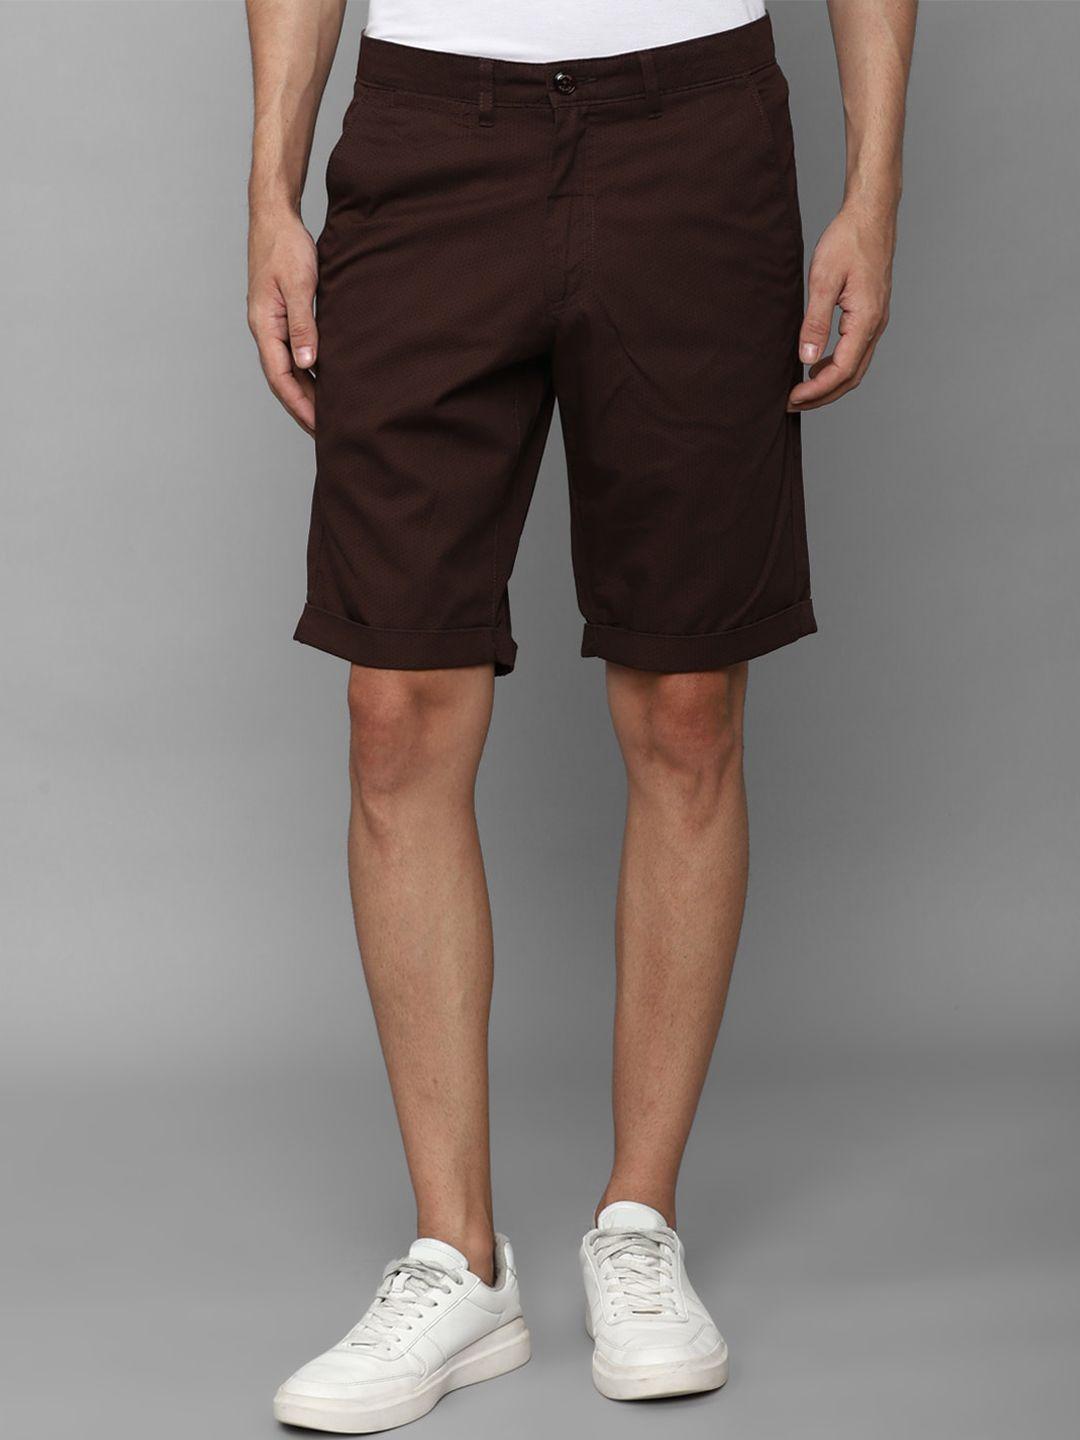 allen-solly-men-slim-fit-mid-rise-pure-cotton-regular-shorts